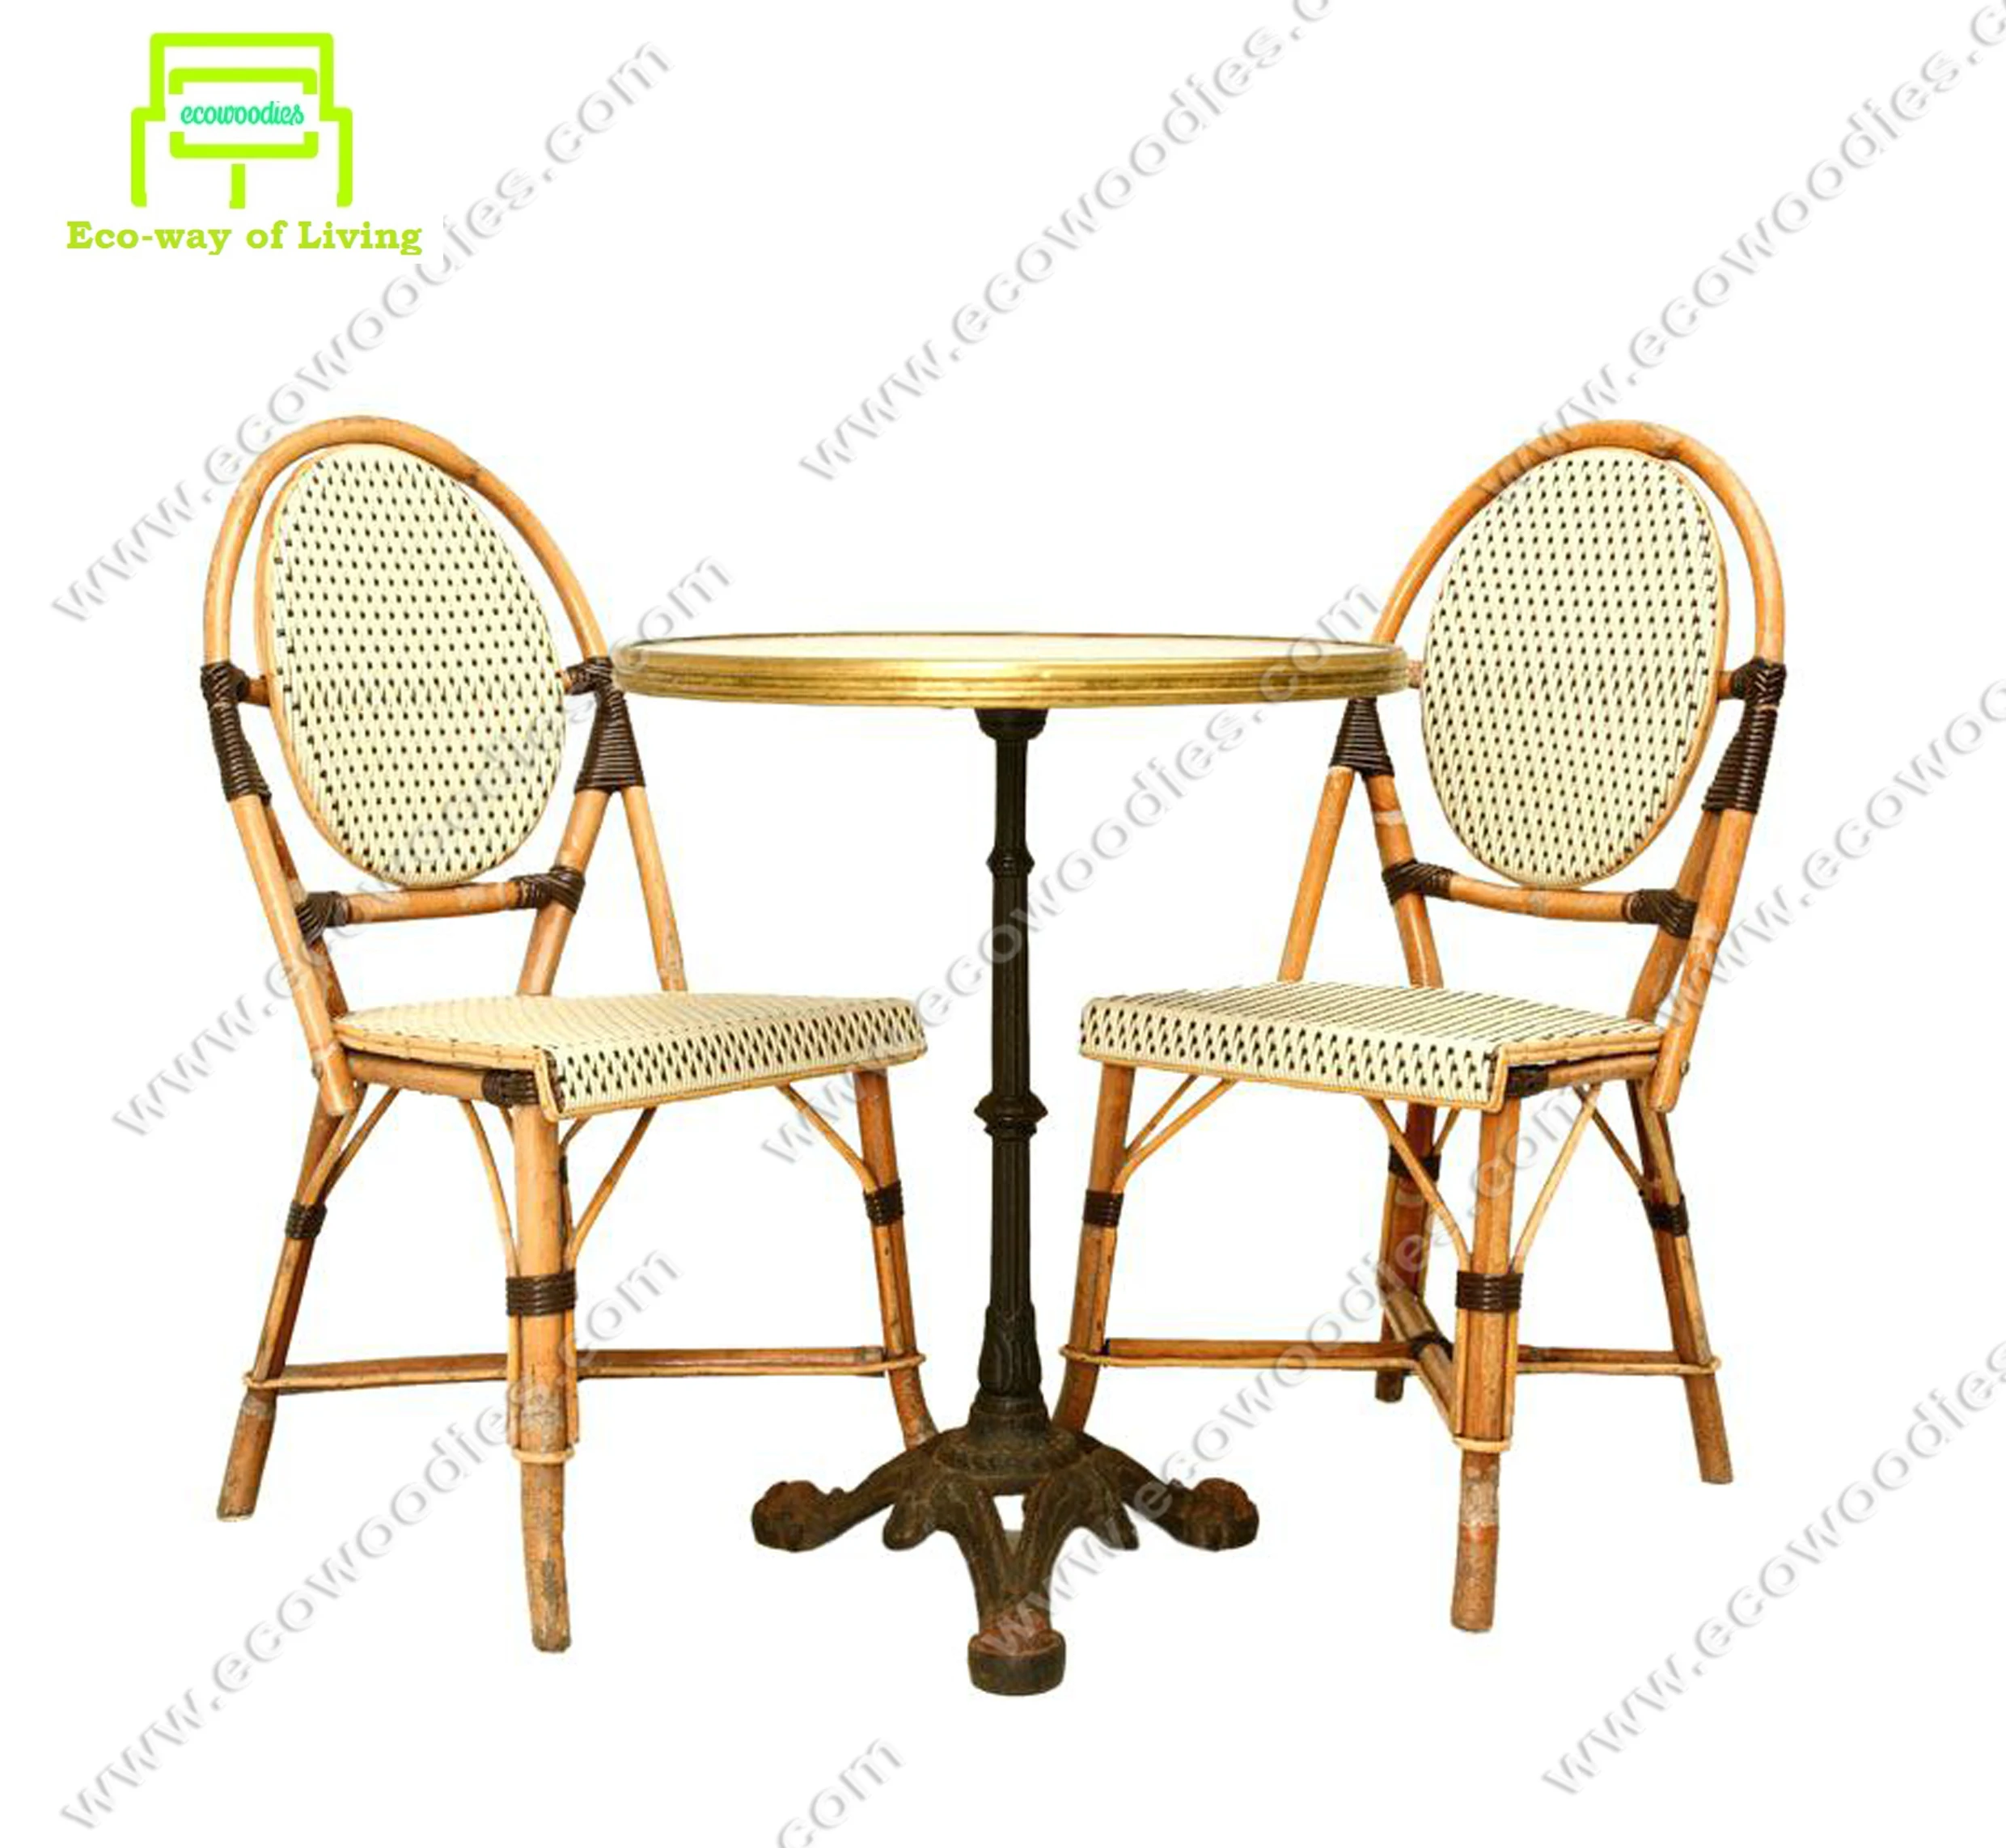 Круглый стол и 2 стула